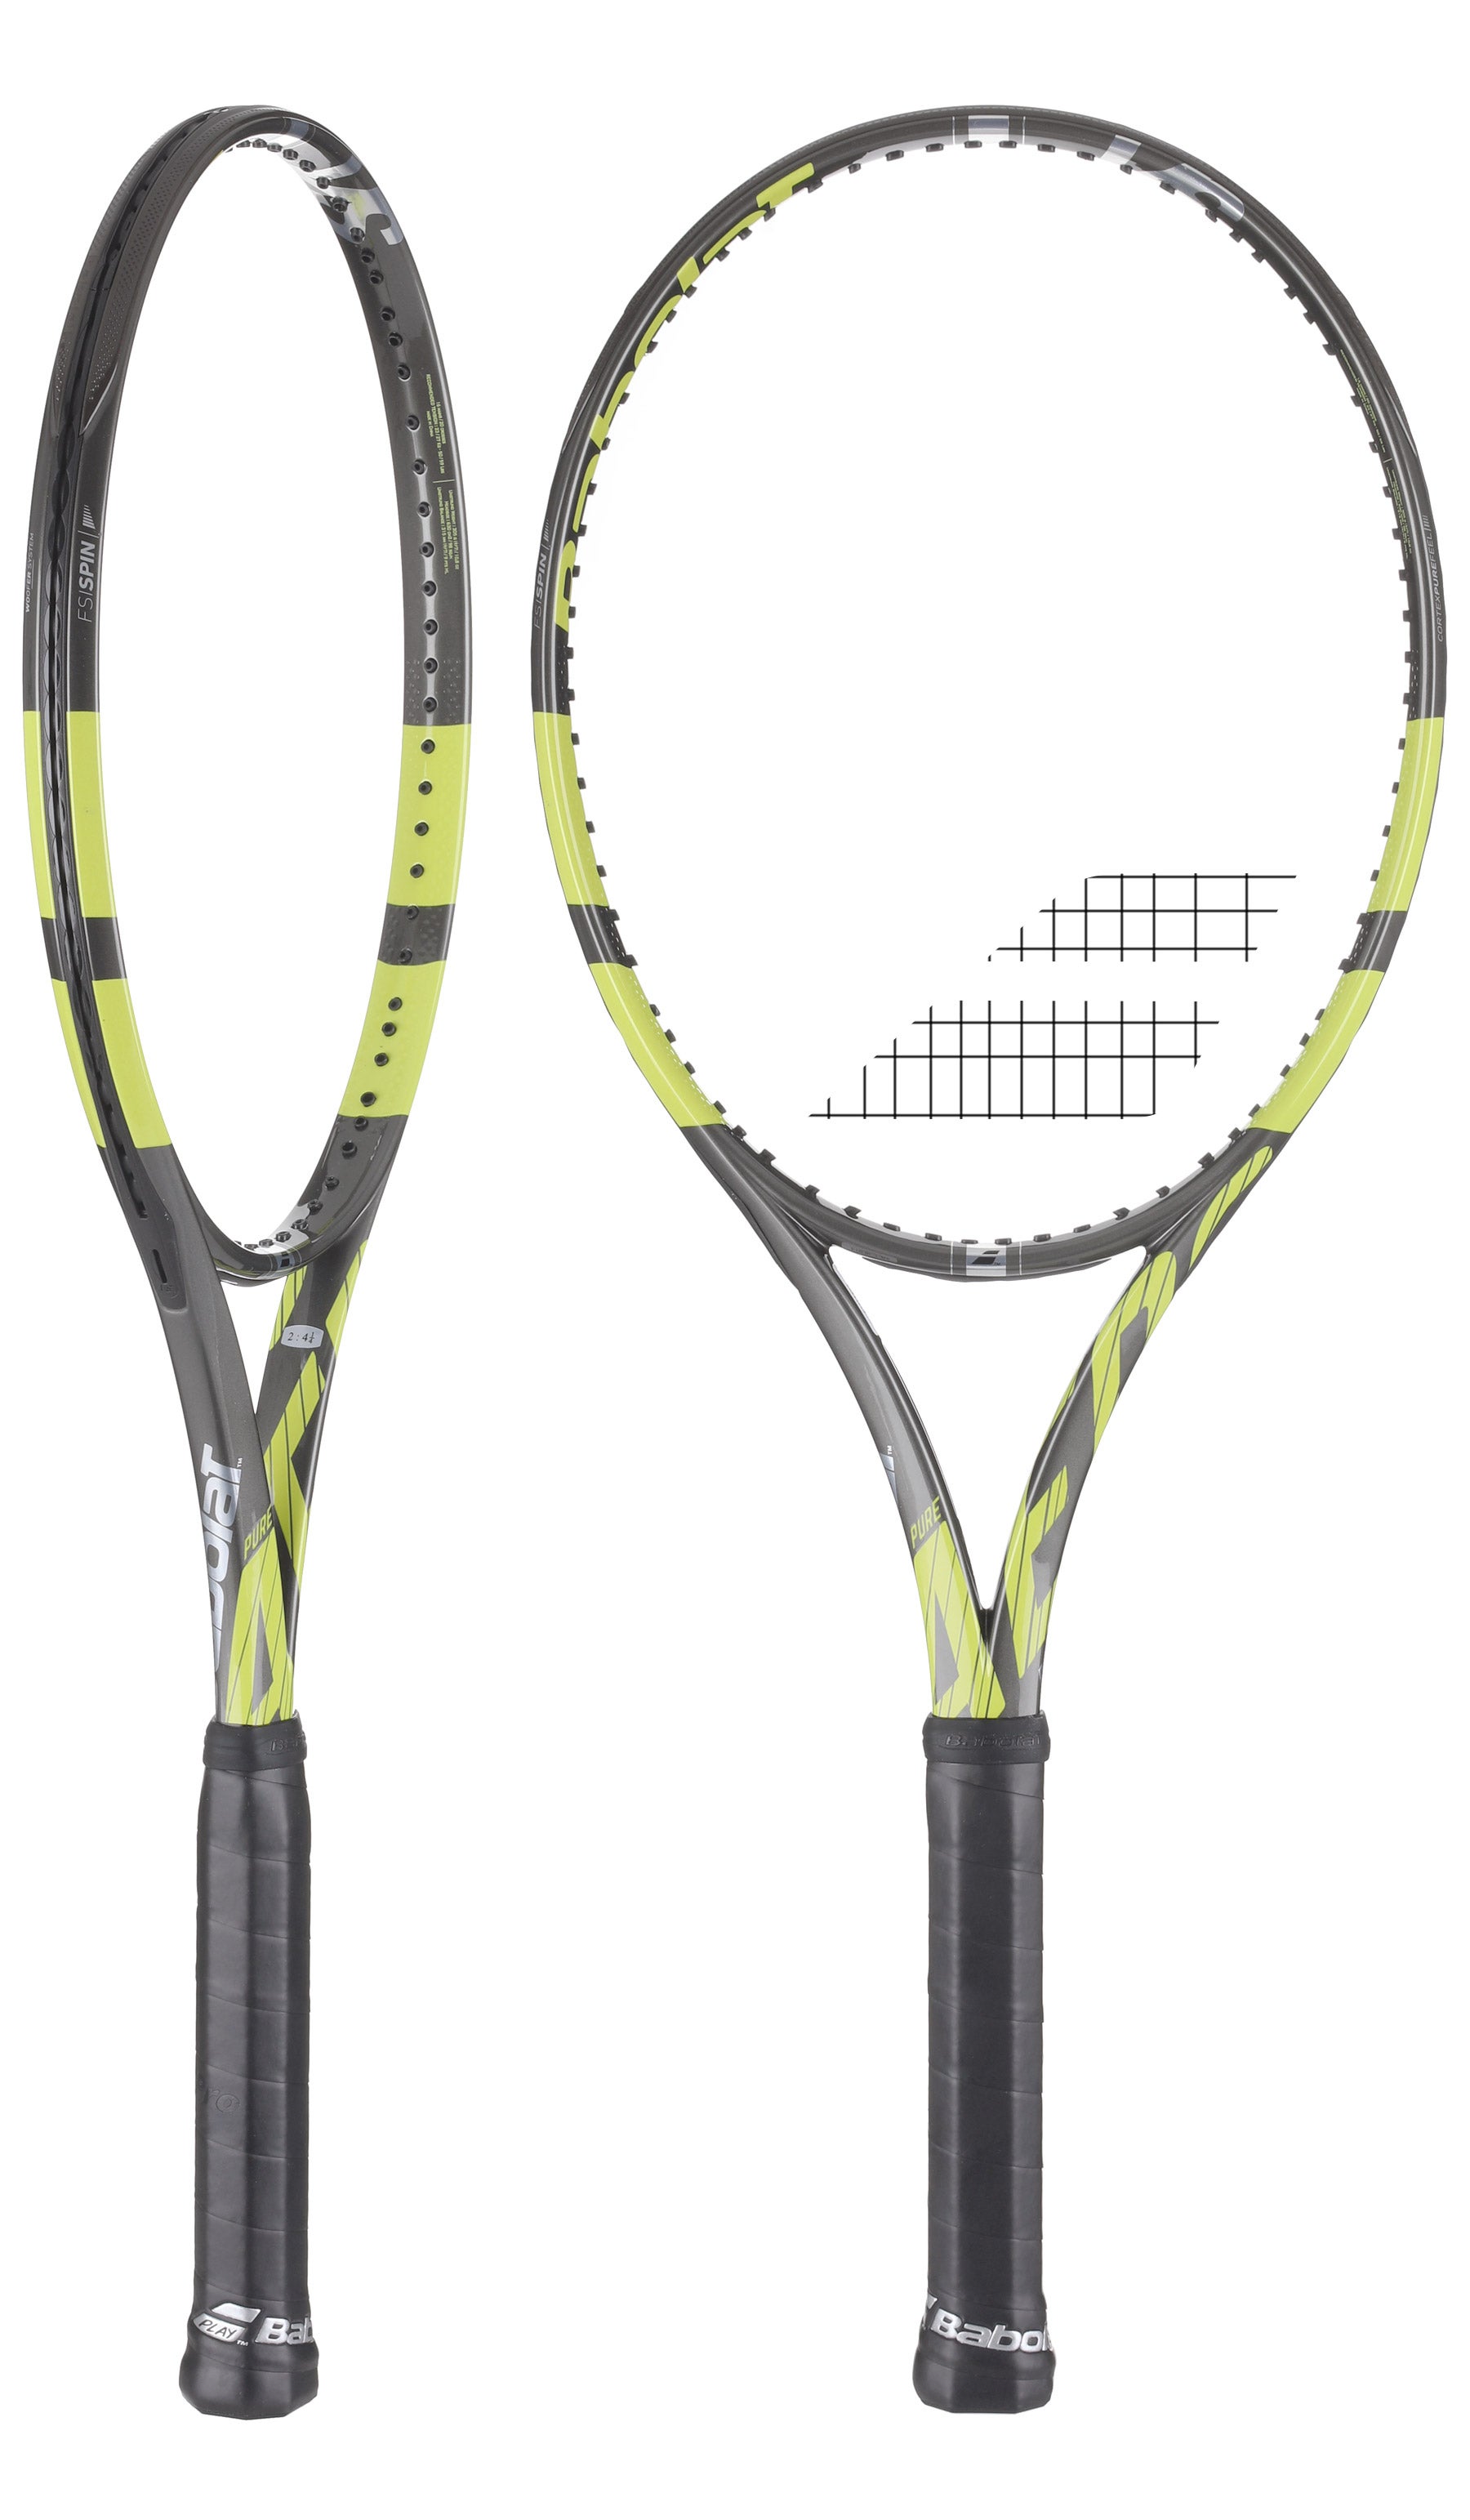 Babolat 2016 pure aero vs 98 head 16x20 10.4oz grip new Tennis Racquet 